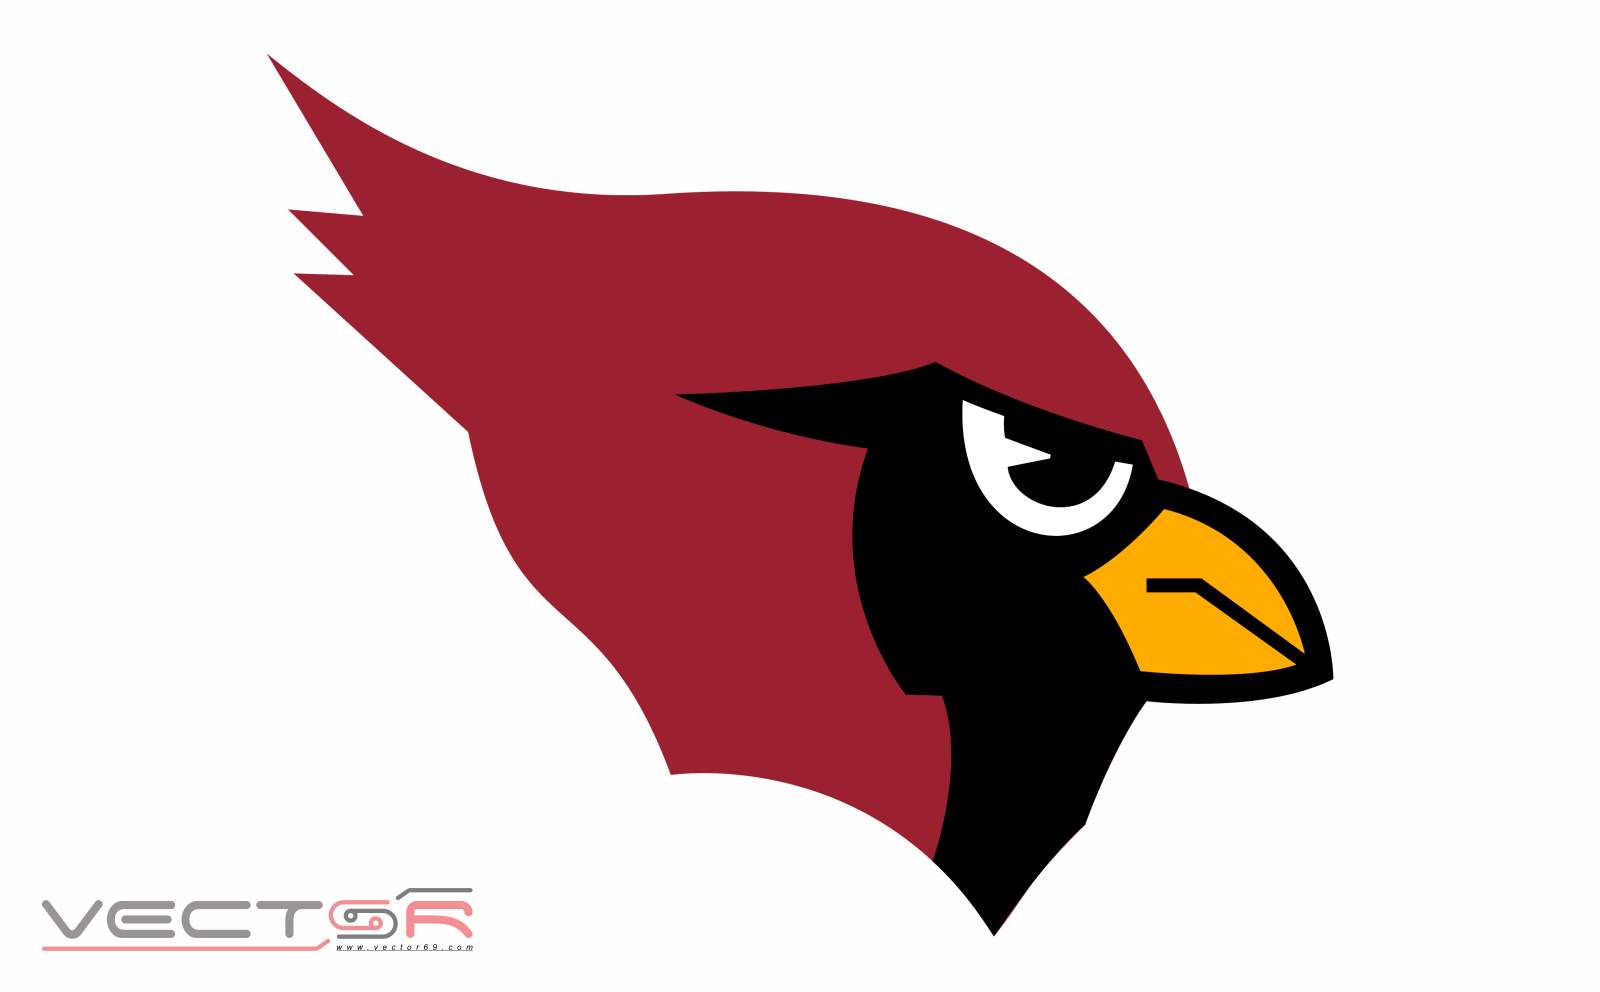 St. Louis Cardinals 1970-1987 Logo - Download Transparent Images, Portable Network Graphics (.PNG)